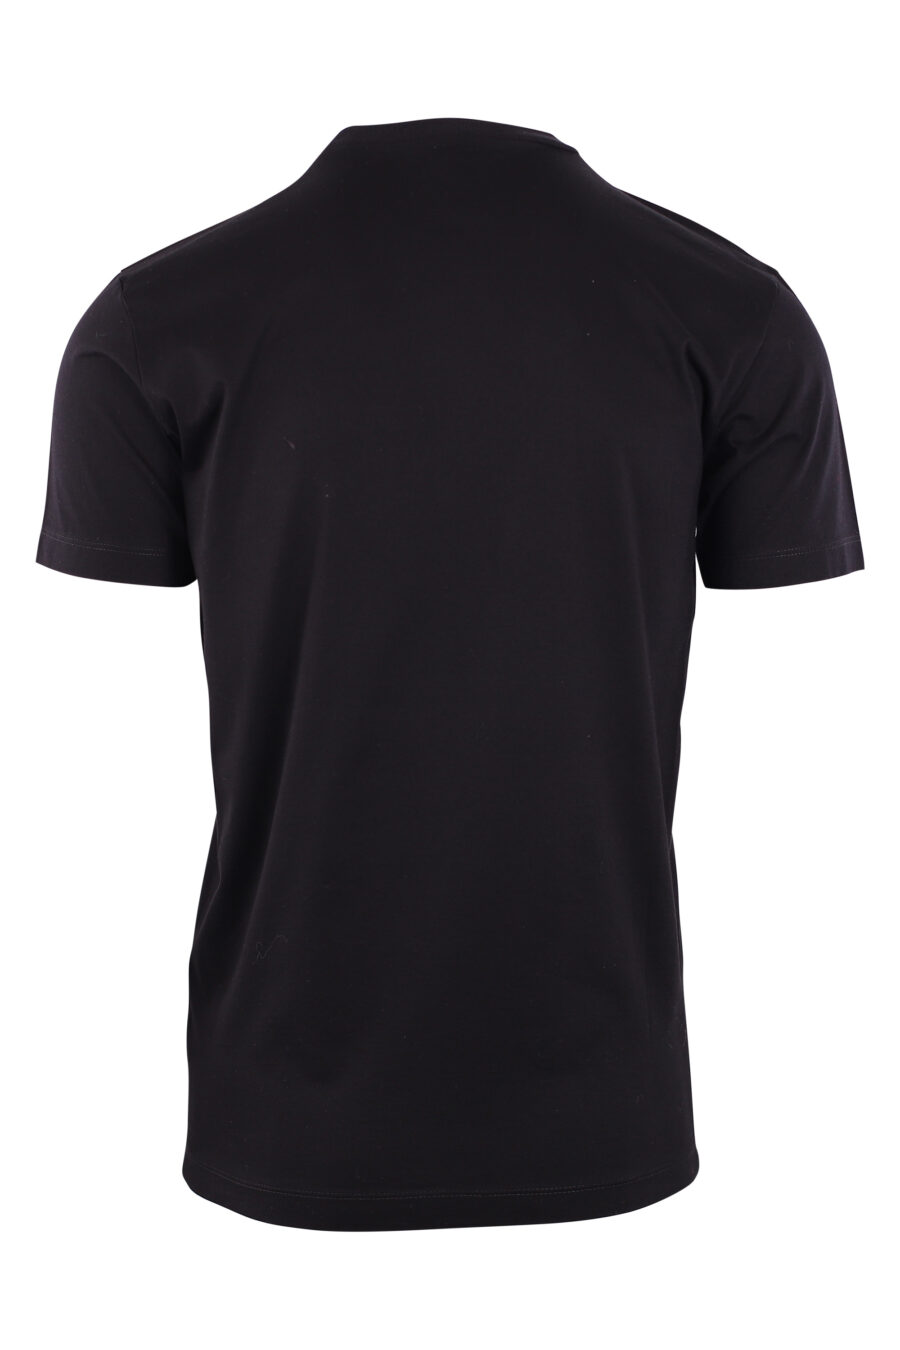 Camiseta negra con logo "est 1964" blanco - IMG 3114